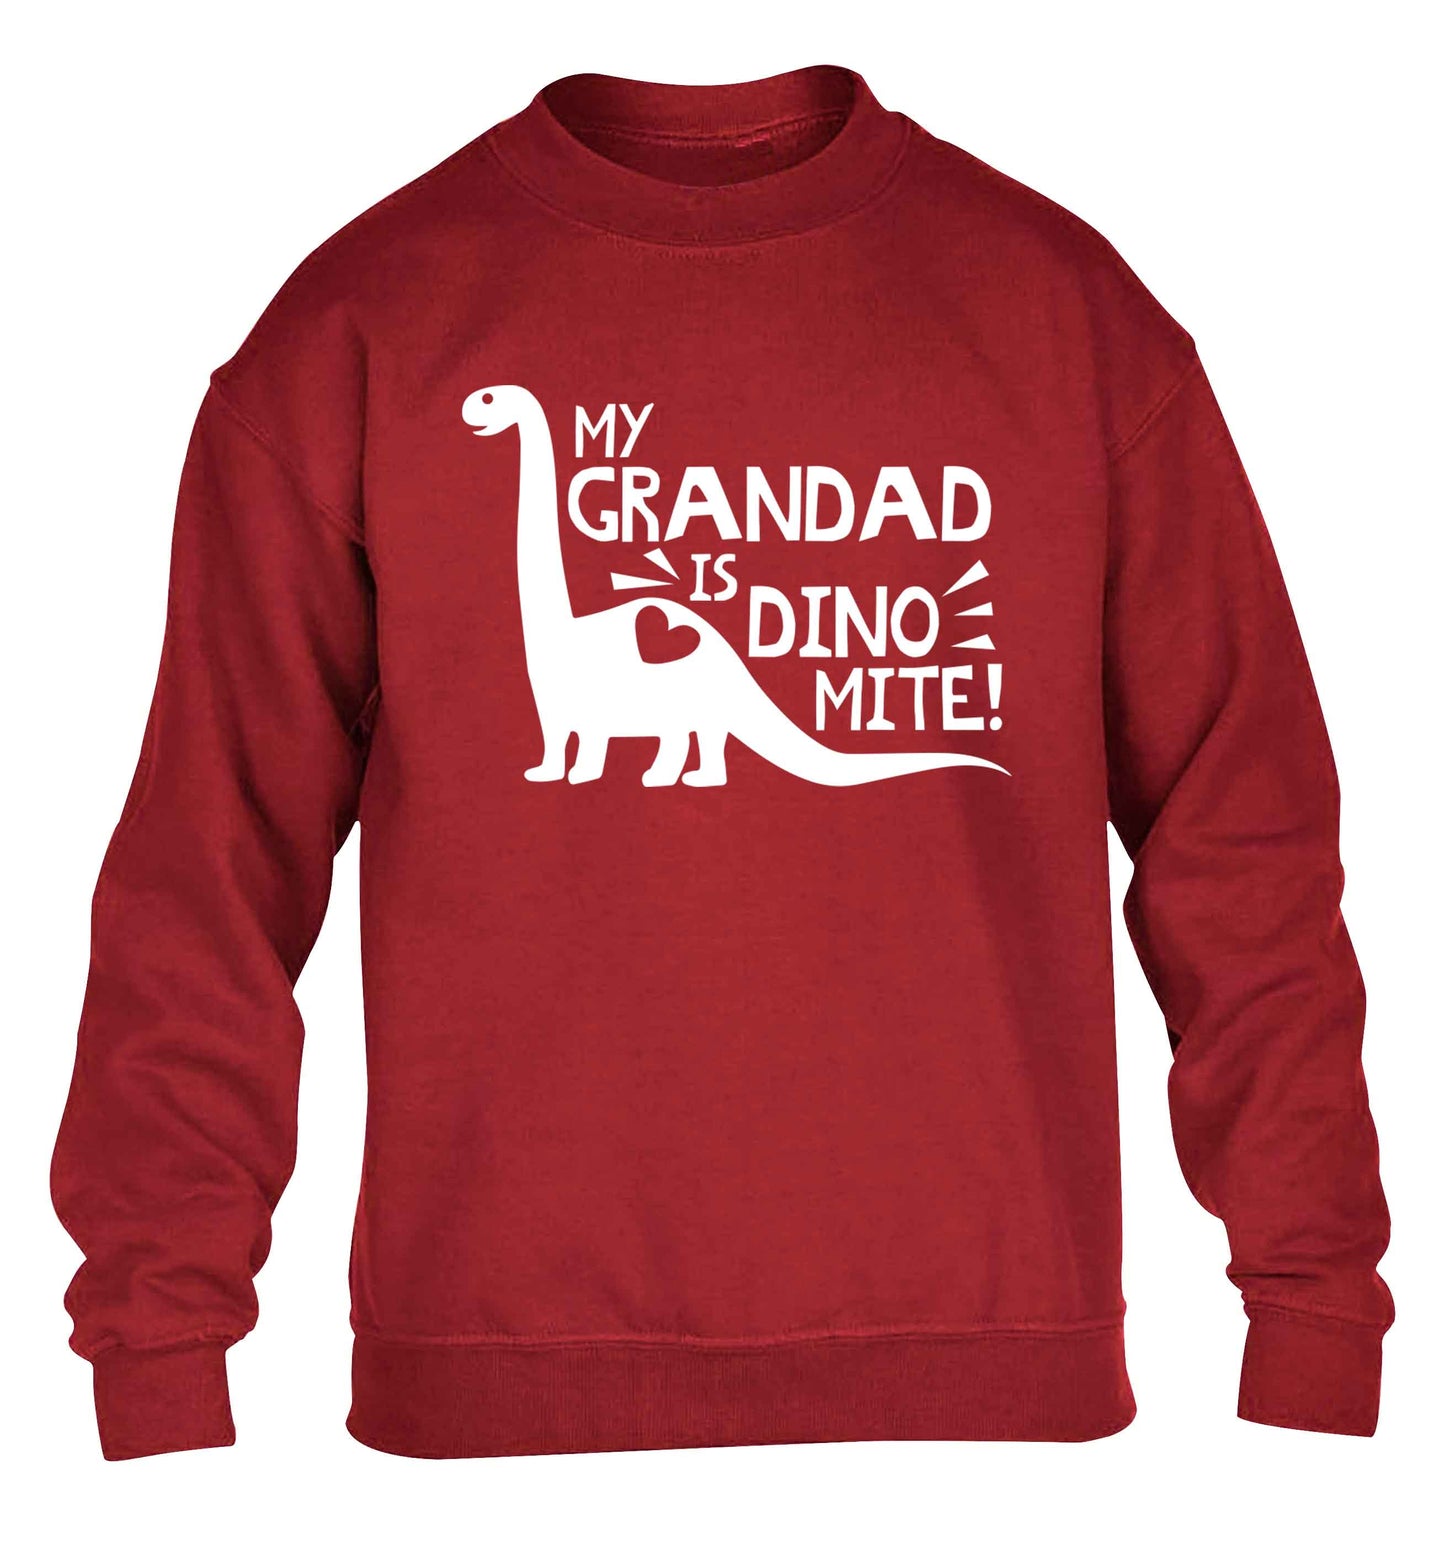 My grandad is dinomite! children's grey sweater 12-13 Years